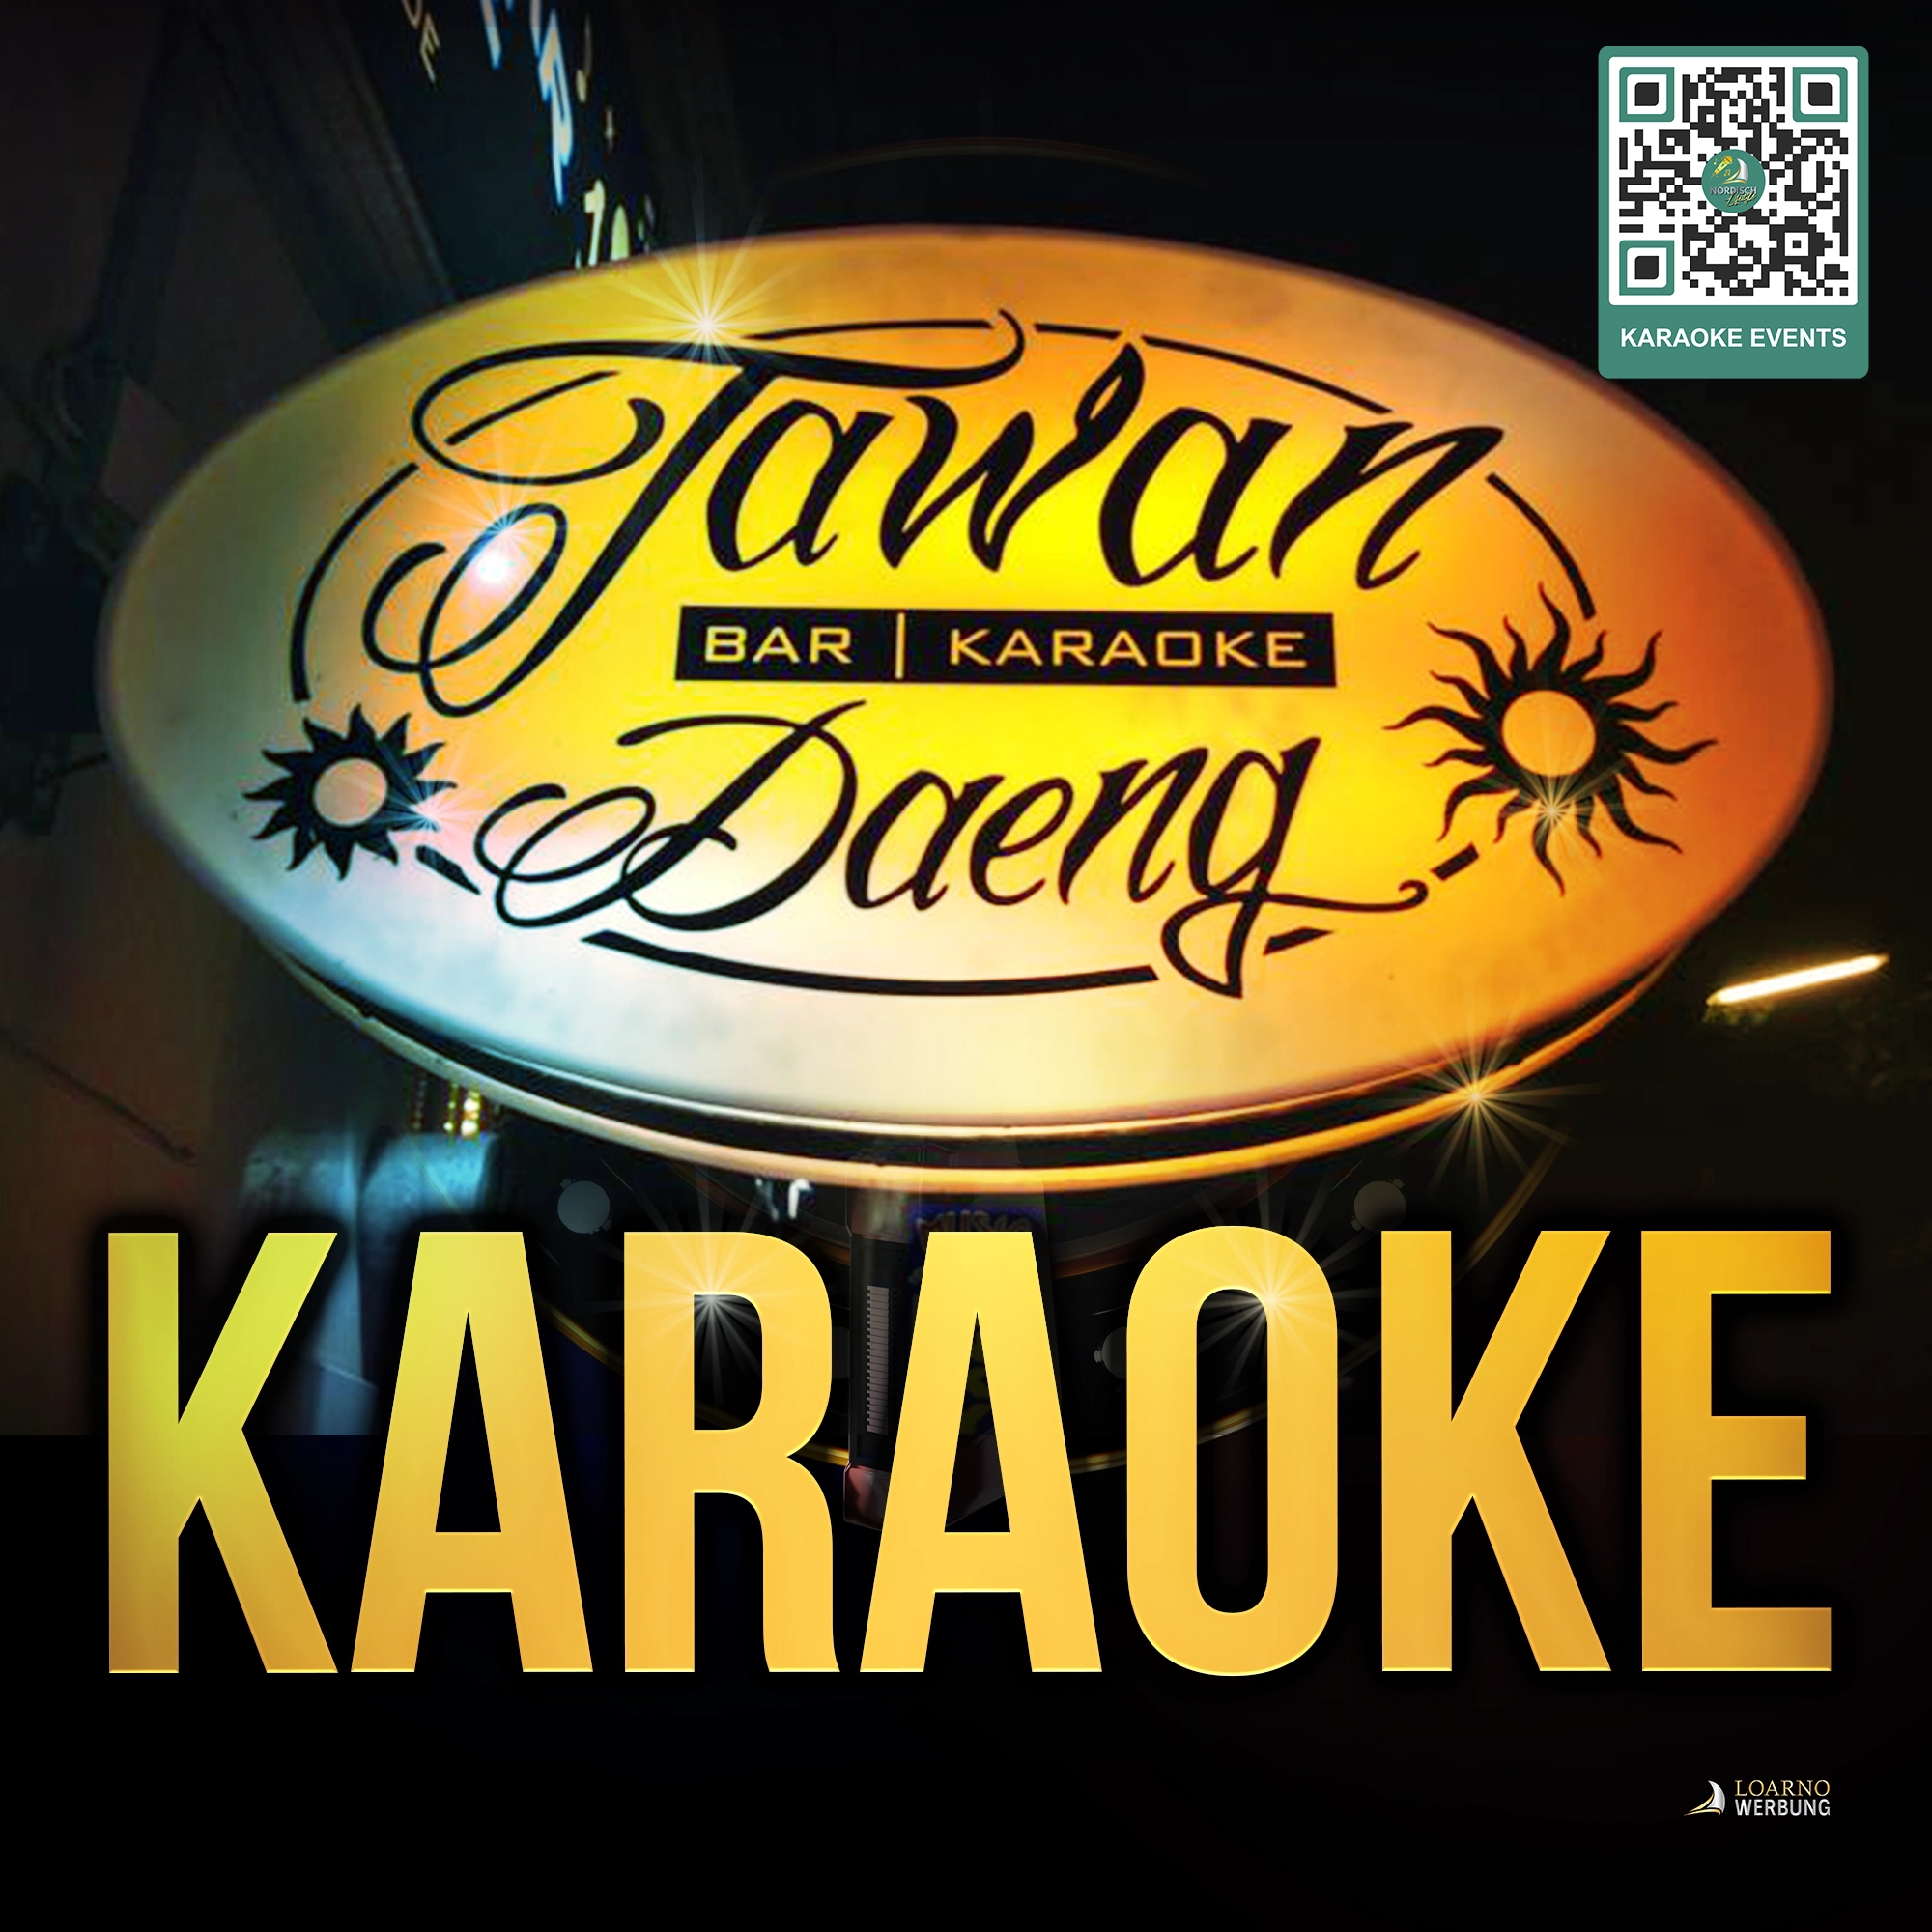 Mehr über den Artikel erfahren Tawan Daeng | Karaoke-Bar